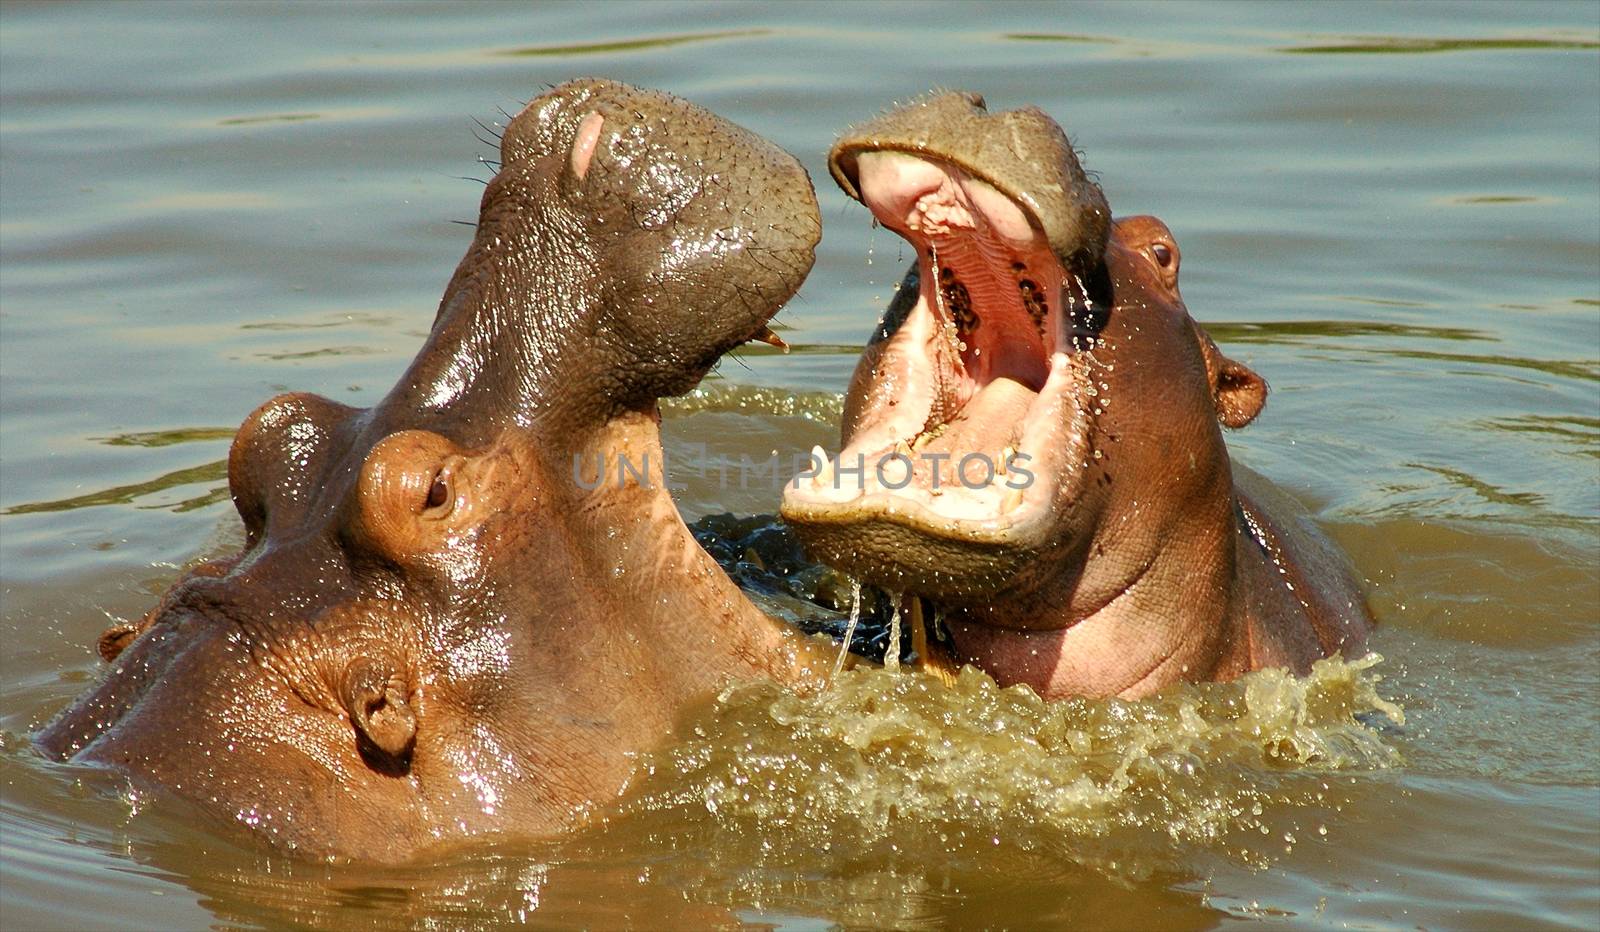 hippo in the wild